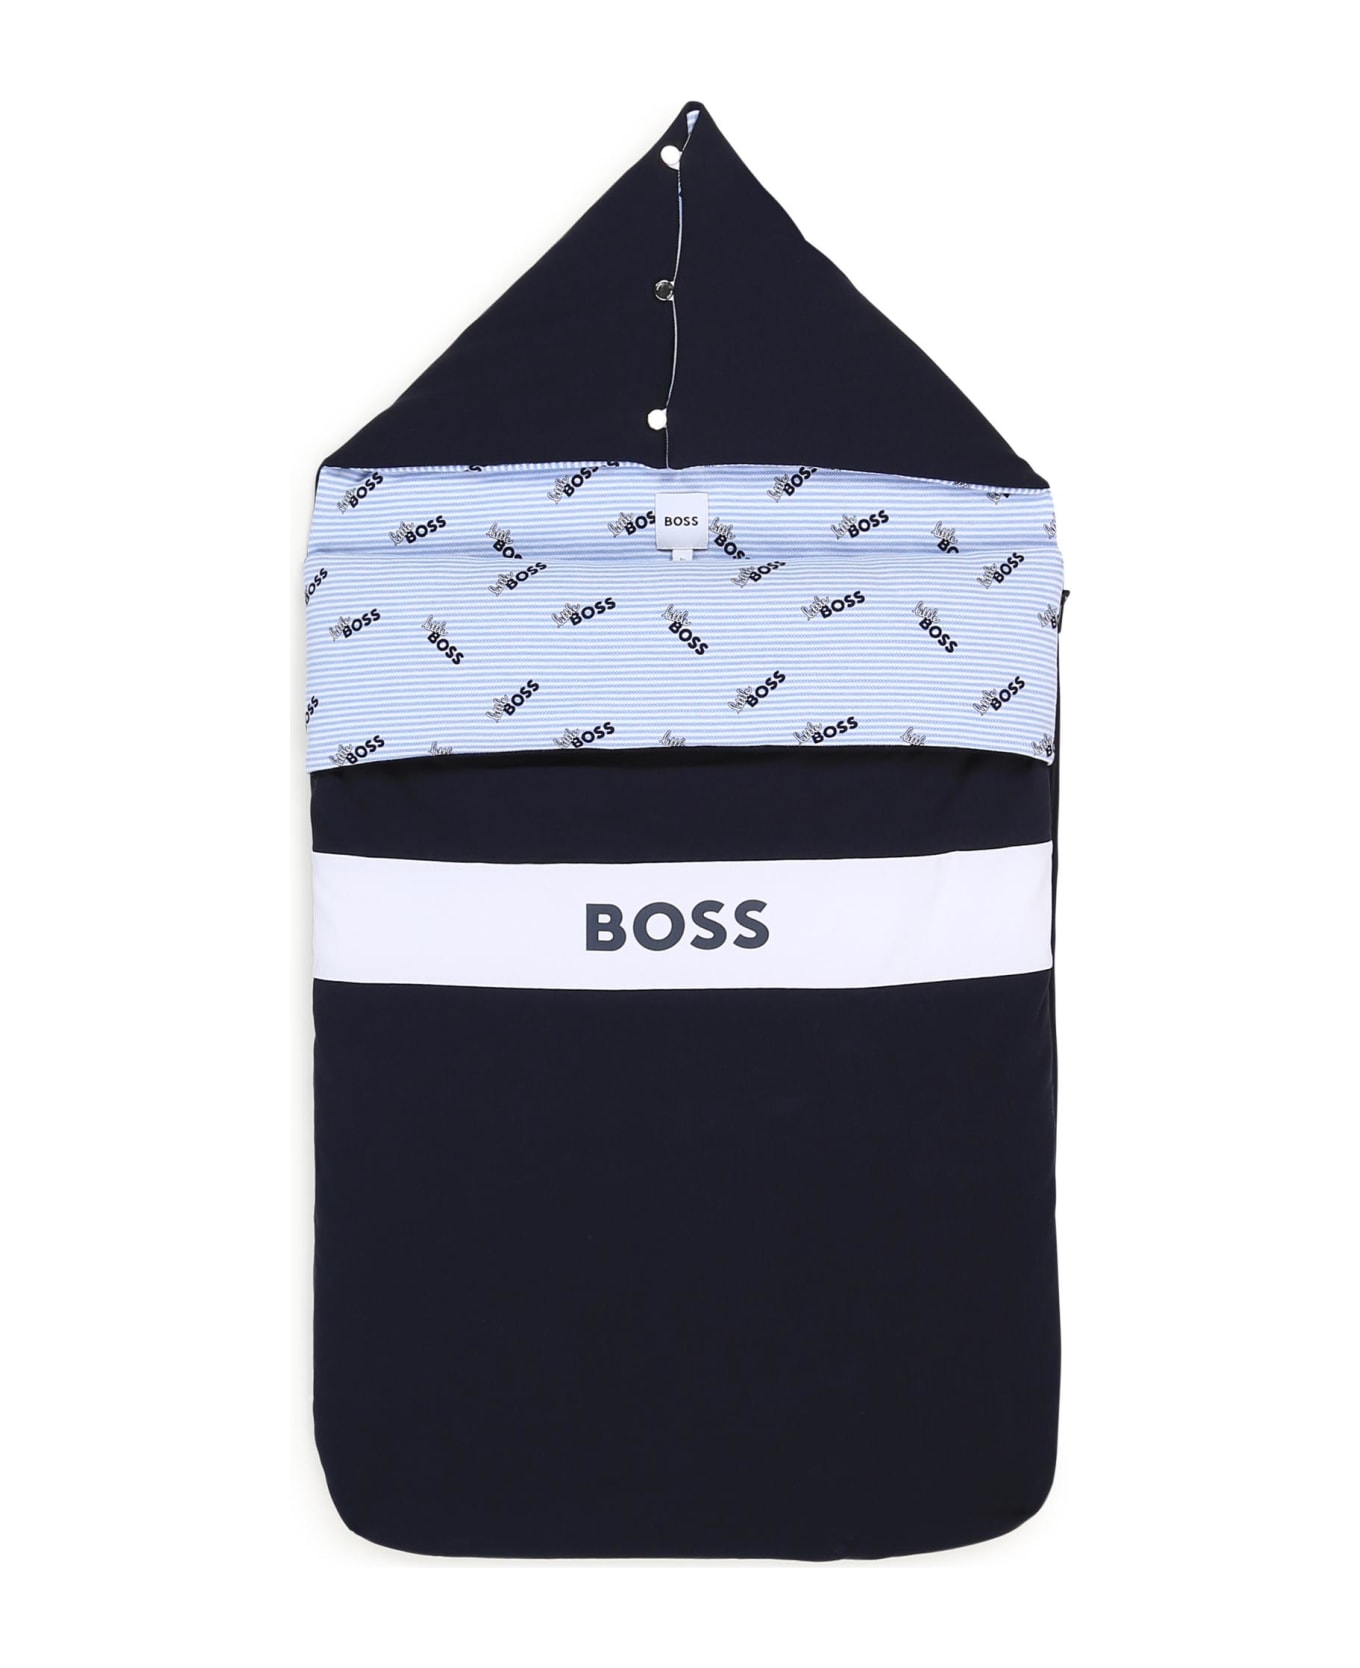 Hugo Boss Blue Sleeping Bag With Logo - Blue